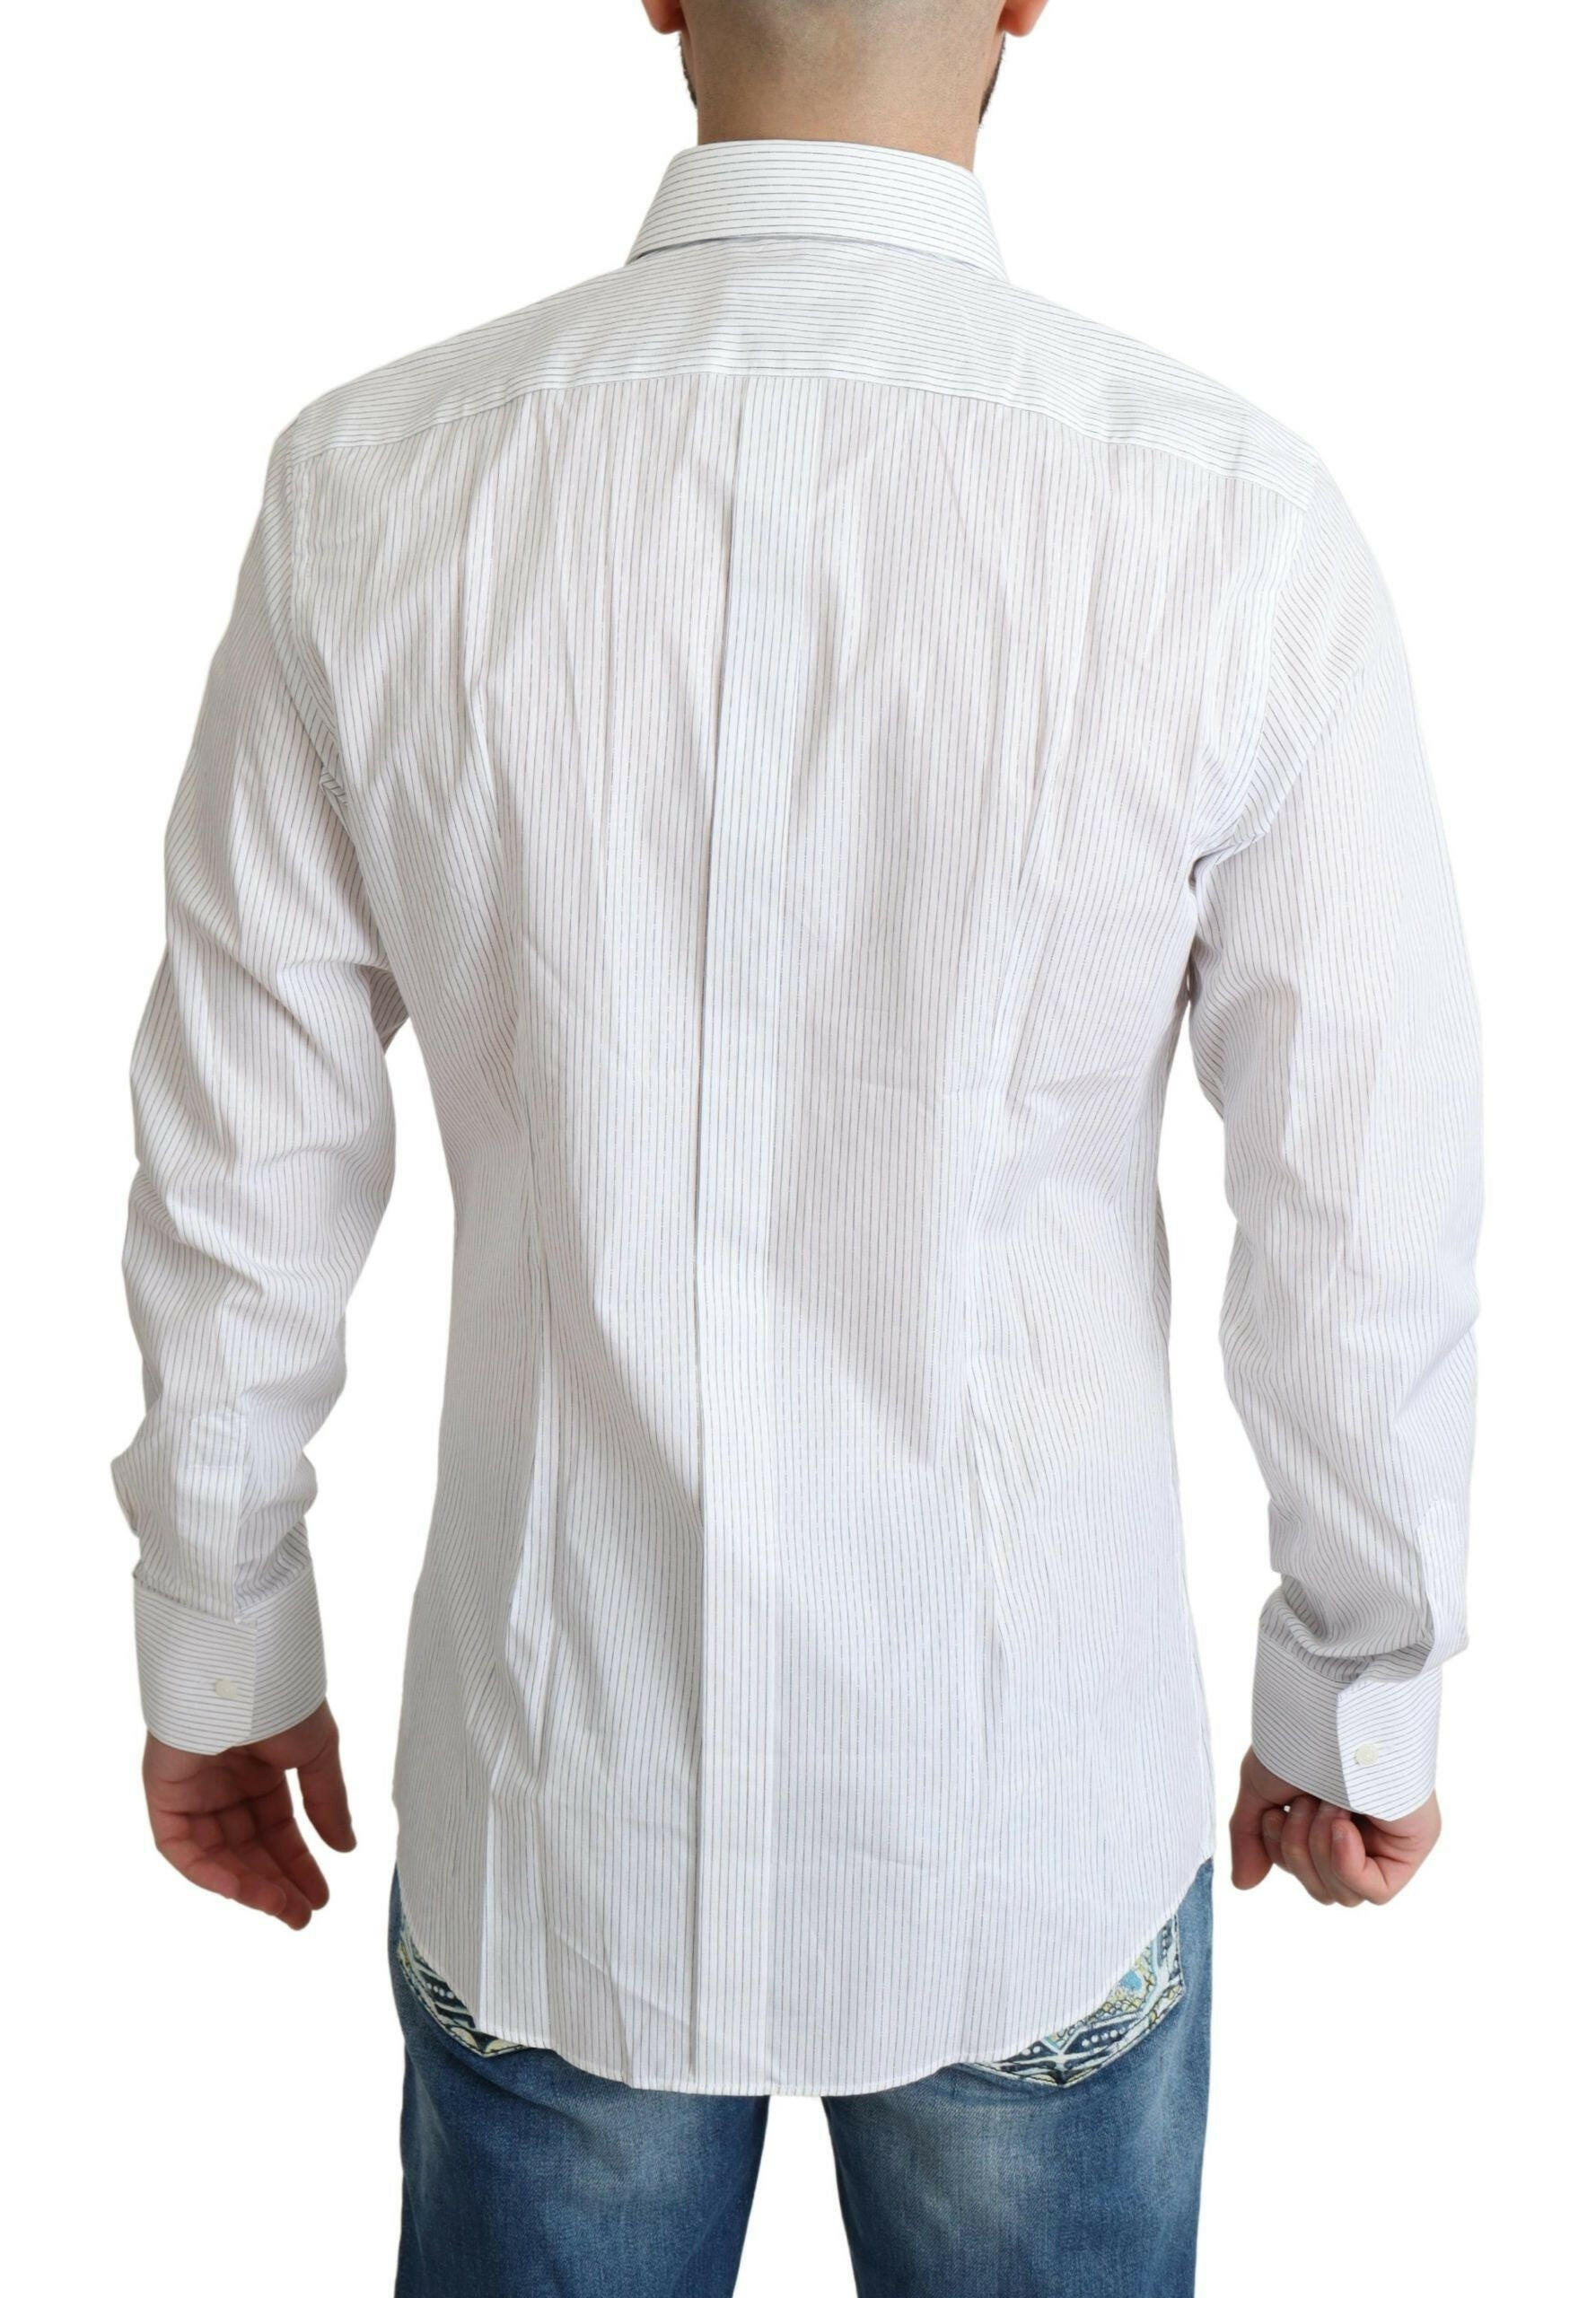 Dolce & Gabbana White Stripes Cotton Formal Dress Shirt - GENUINE AUTHENTIC BRAND LLC  